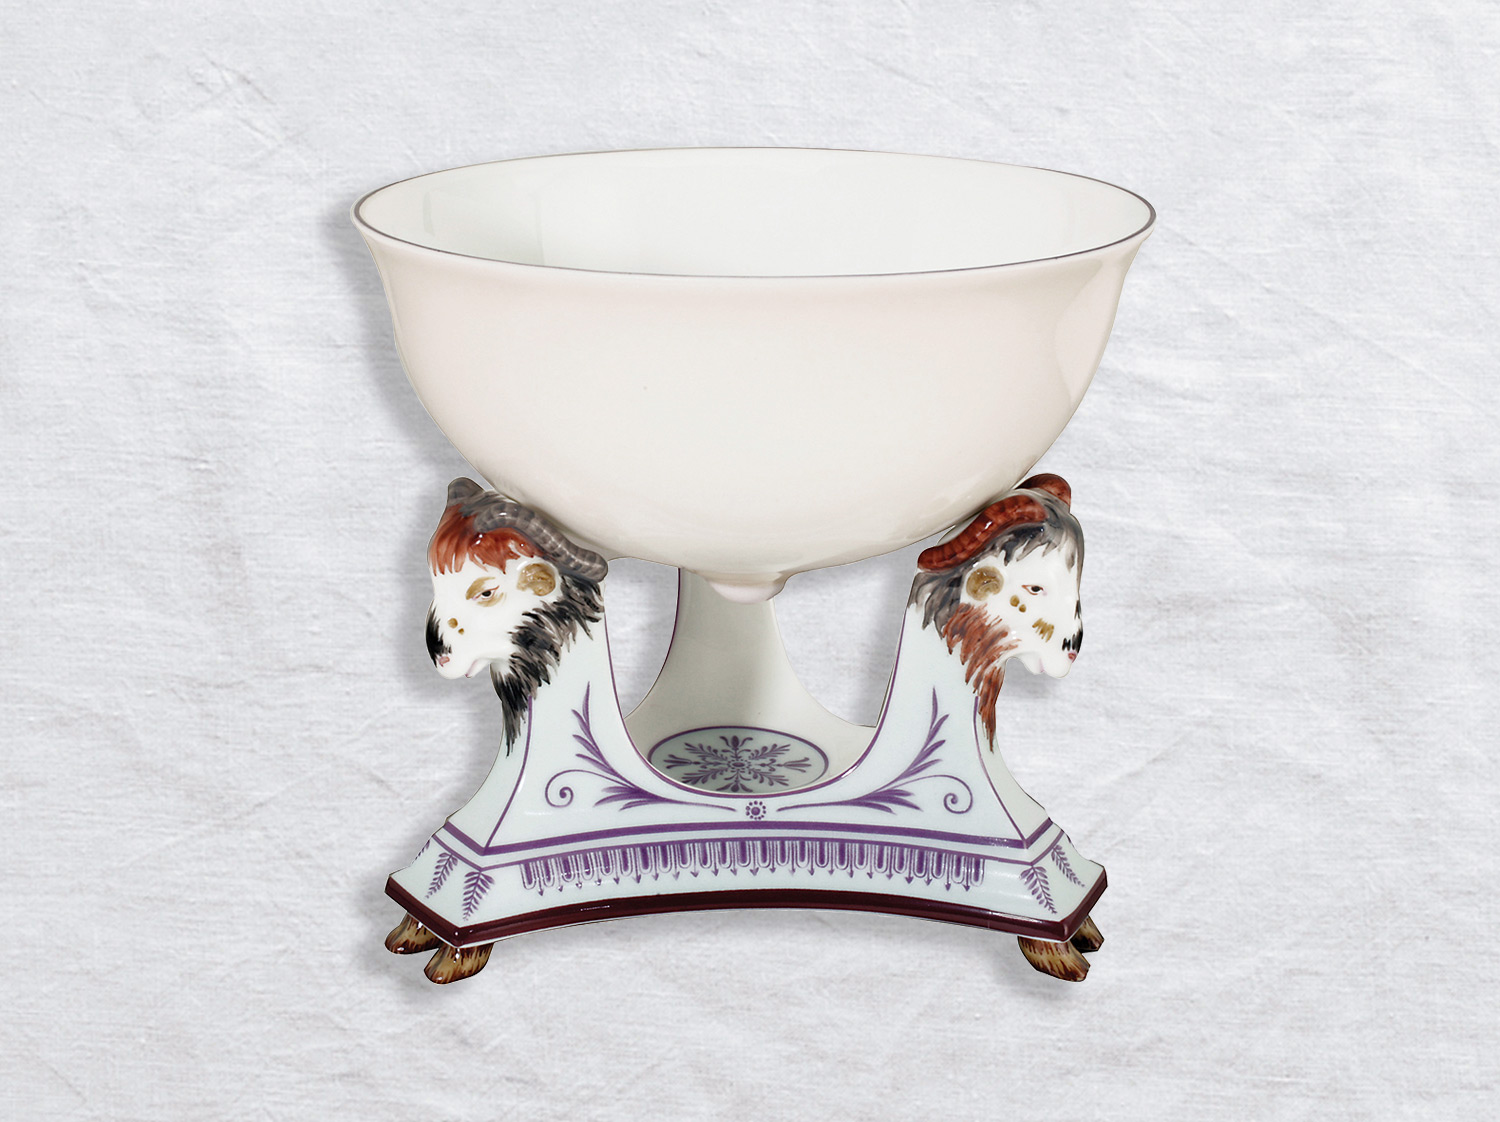 China Tripod breast bowl of the collection La laiterie de rambouillet | Bernardaud